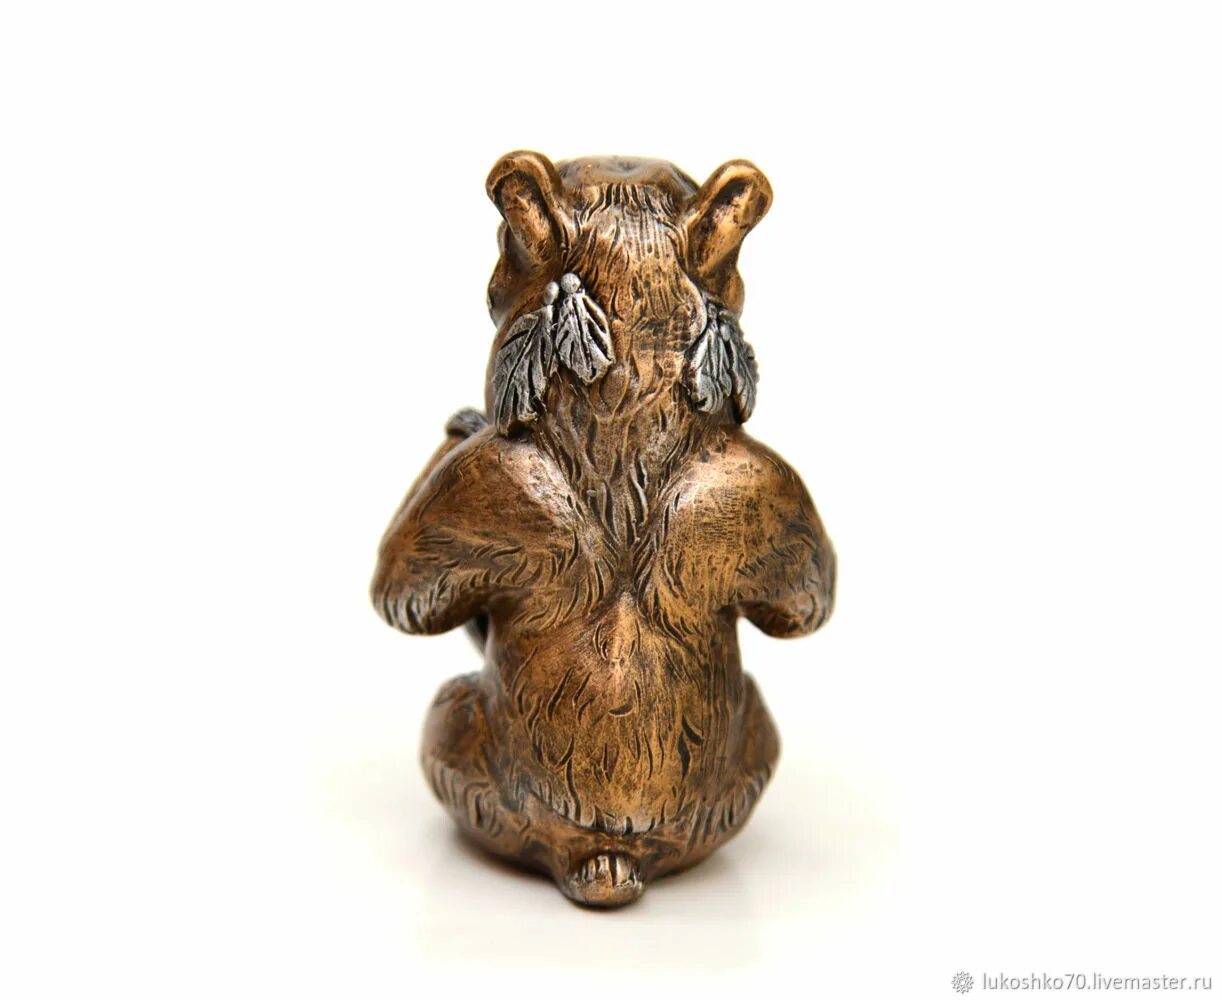 Bear stone. Статуэтка шаман бар медведь 2712. Медведь из камня статуэтка. Статуэтка "медведь". Медведь шаман.